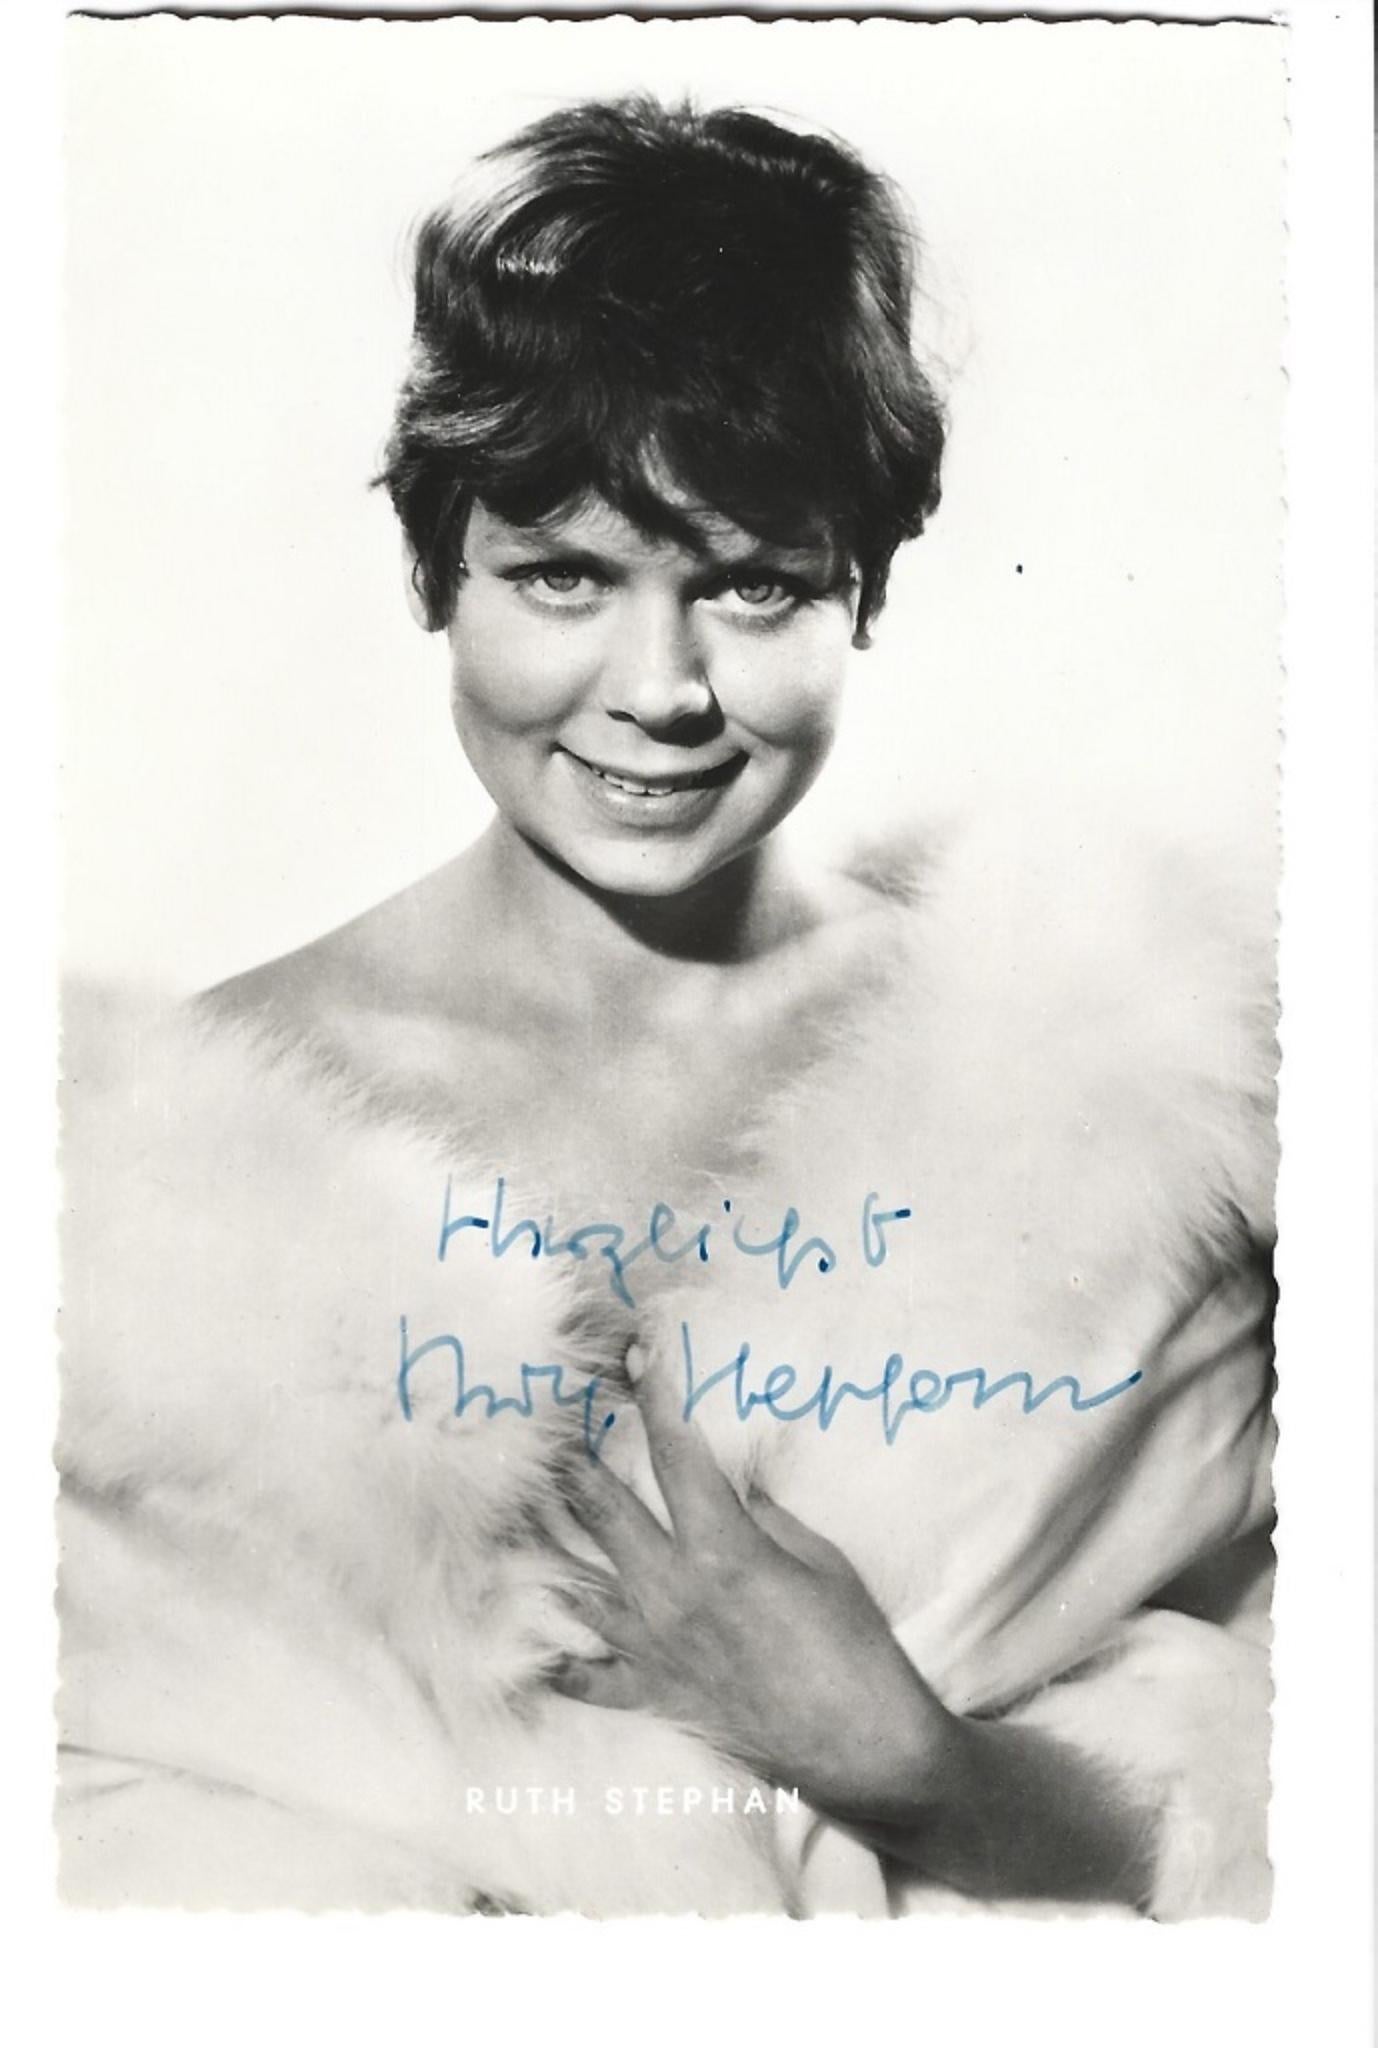 Unknown Portrait Photograph - Vintage Autographed b/w Postcard by Ruth Stephan - 1950s